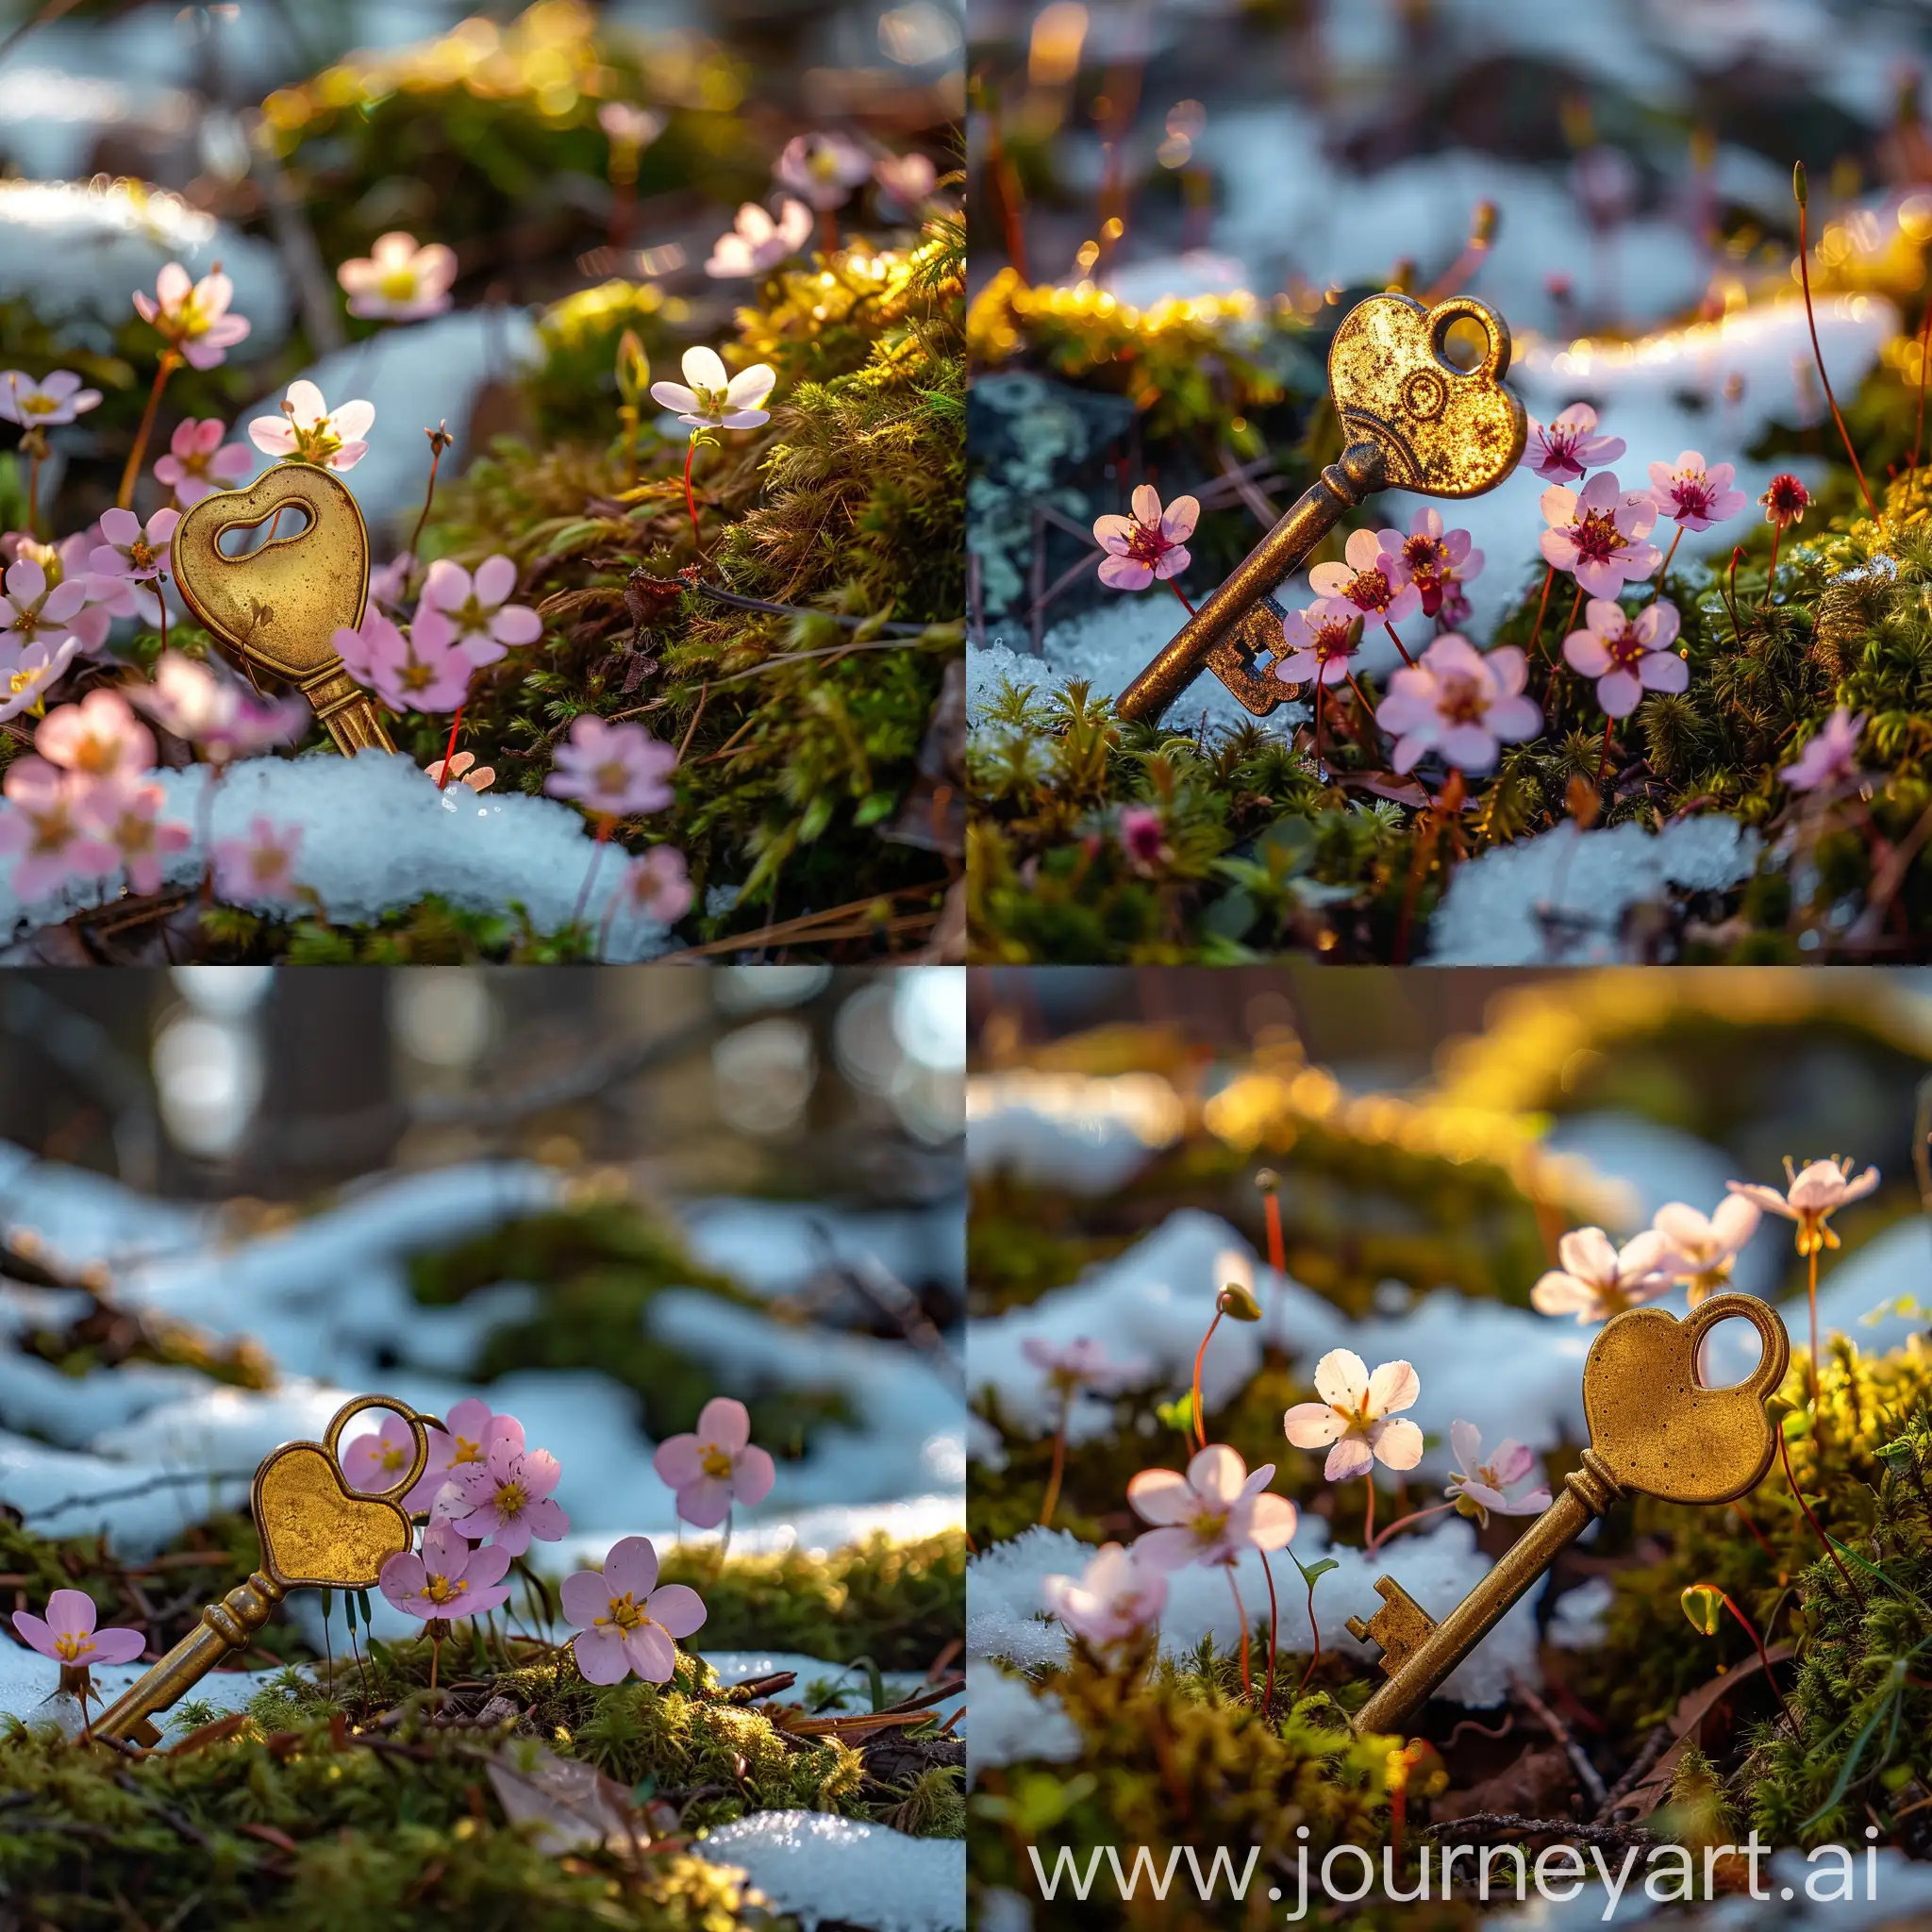 Golden-Vintage-HeartShaped-Key-Amongst-Pink-Flowers-in-Forest-Morning-Sunlight